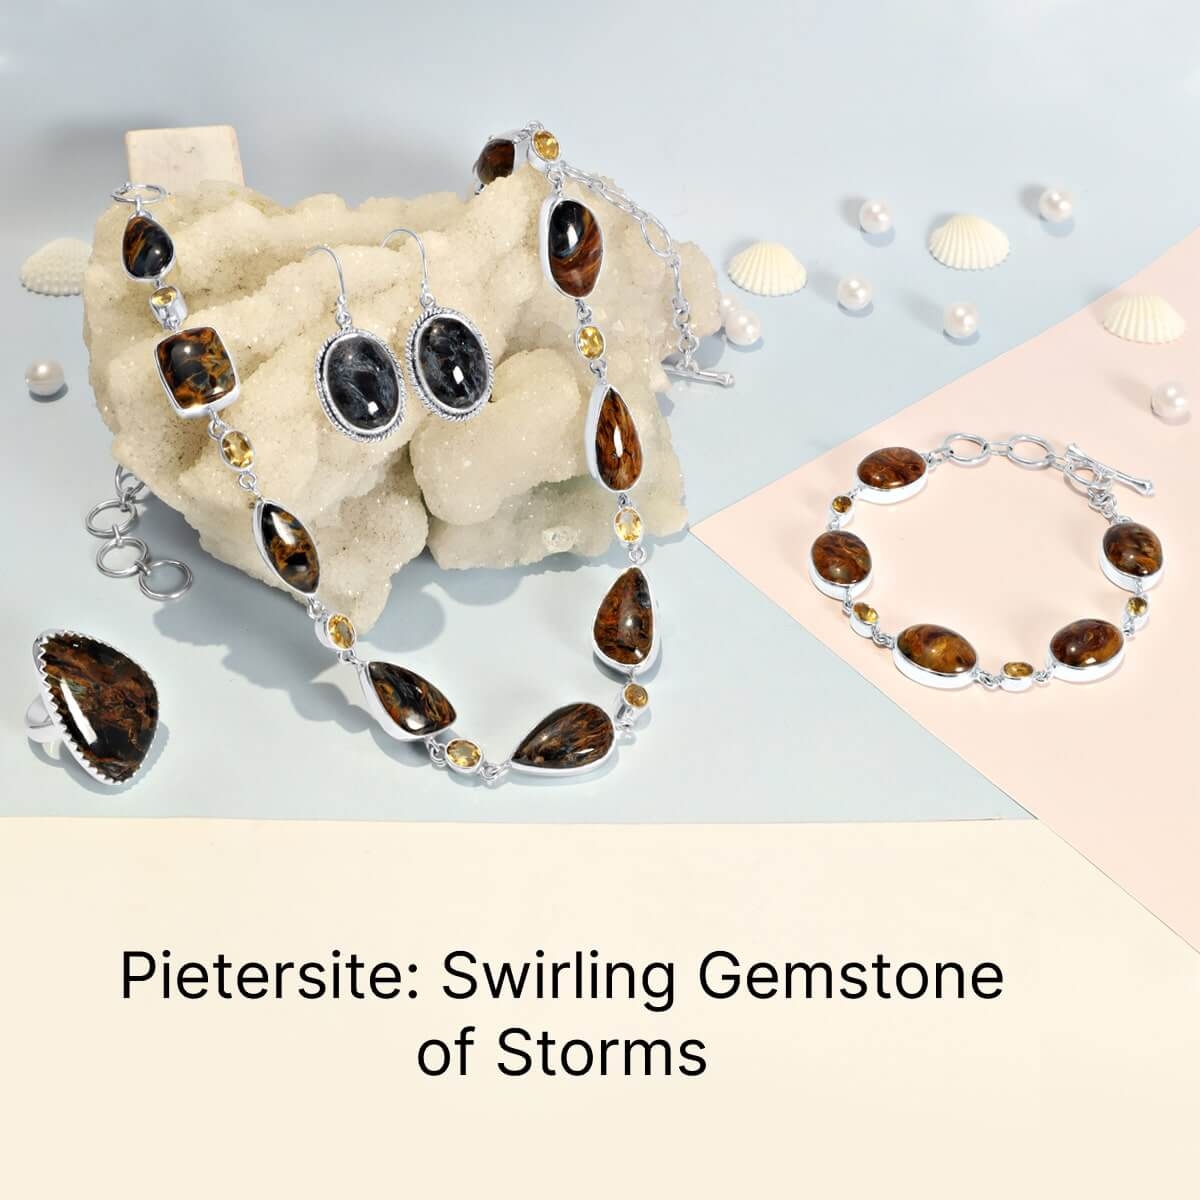 Pietersite Gemstone: Meaning, Healing Properties & Uses